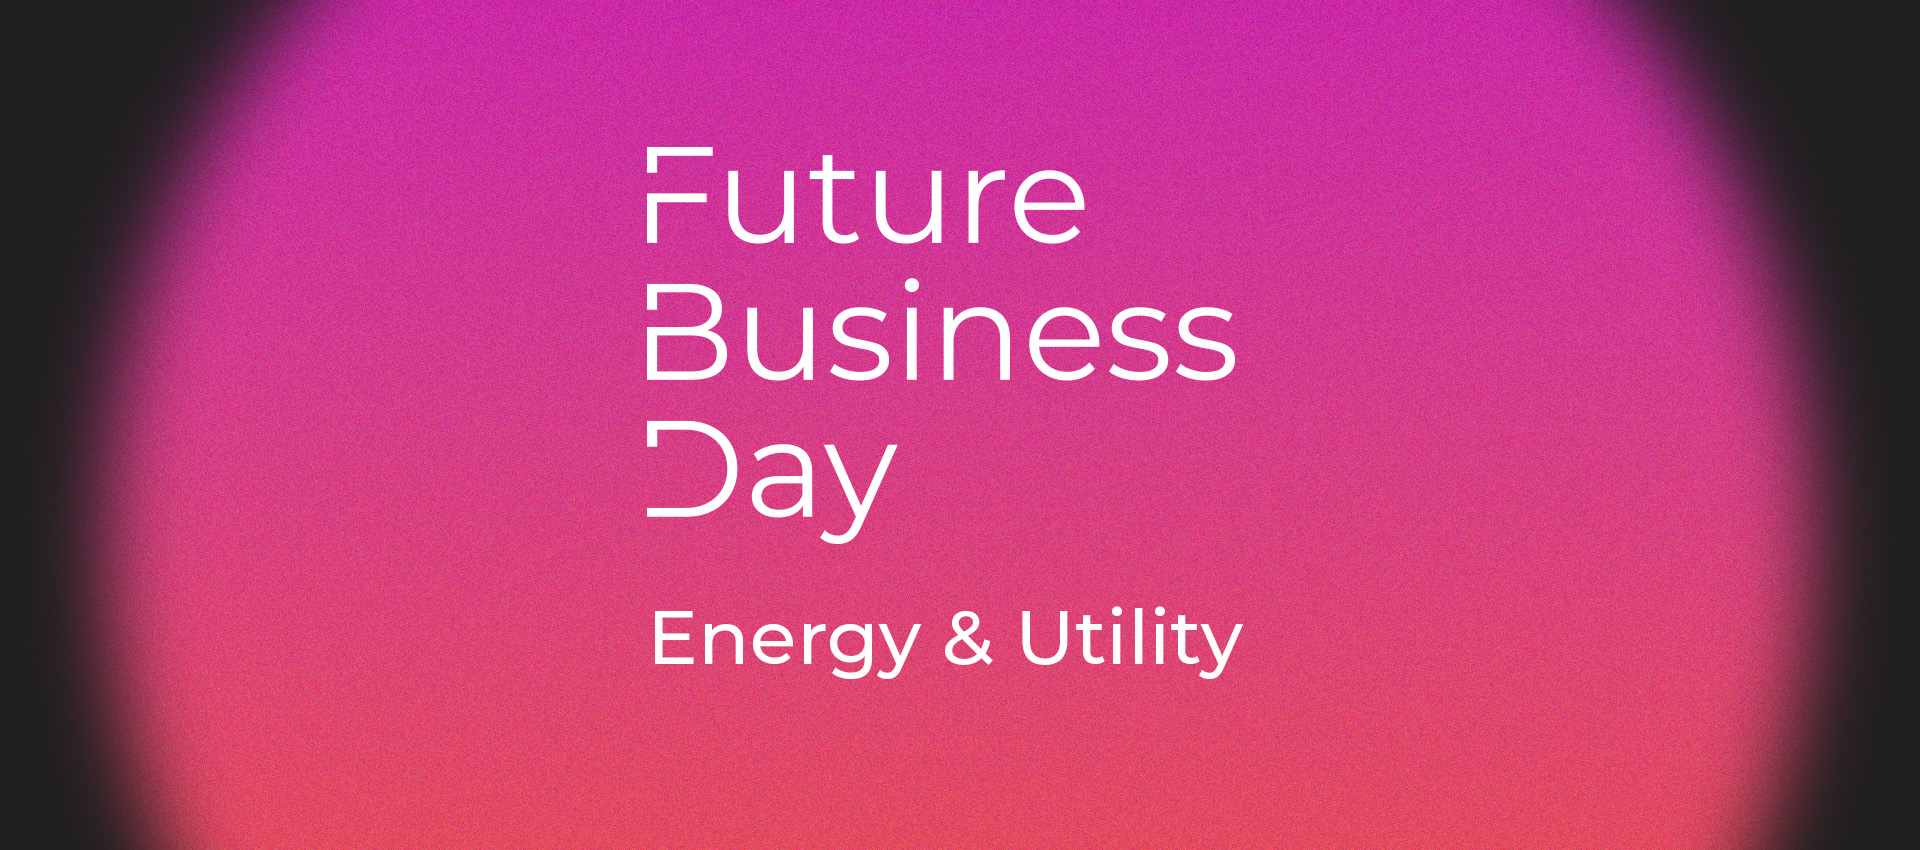 future business day banner website.jpg